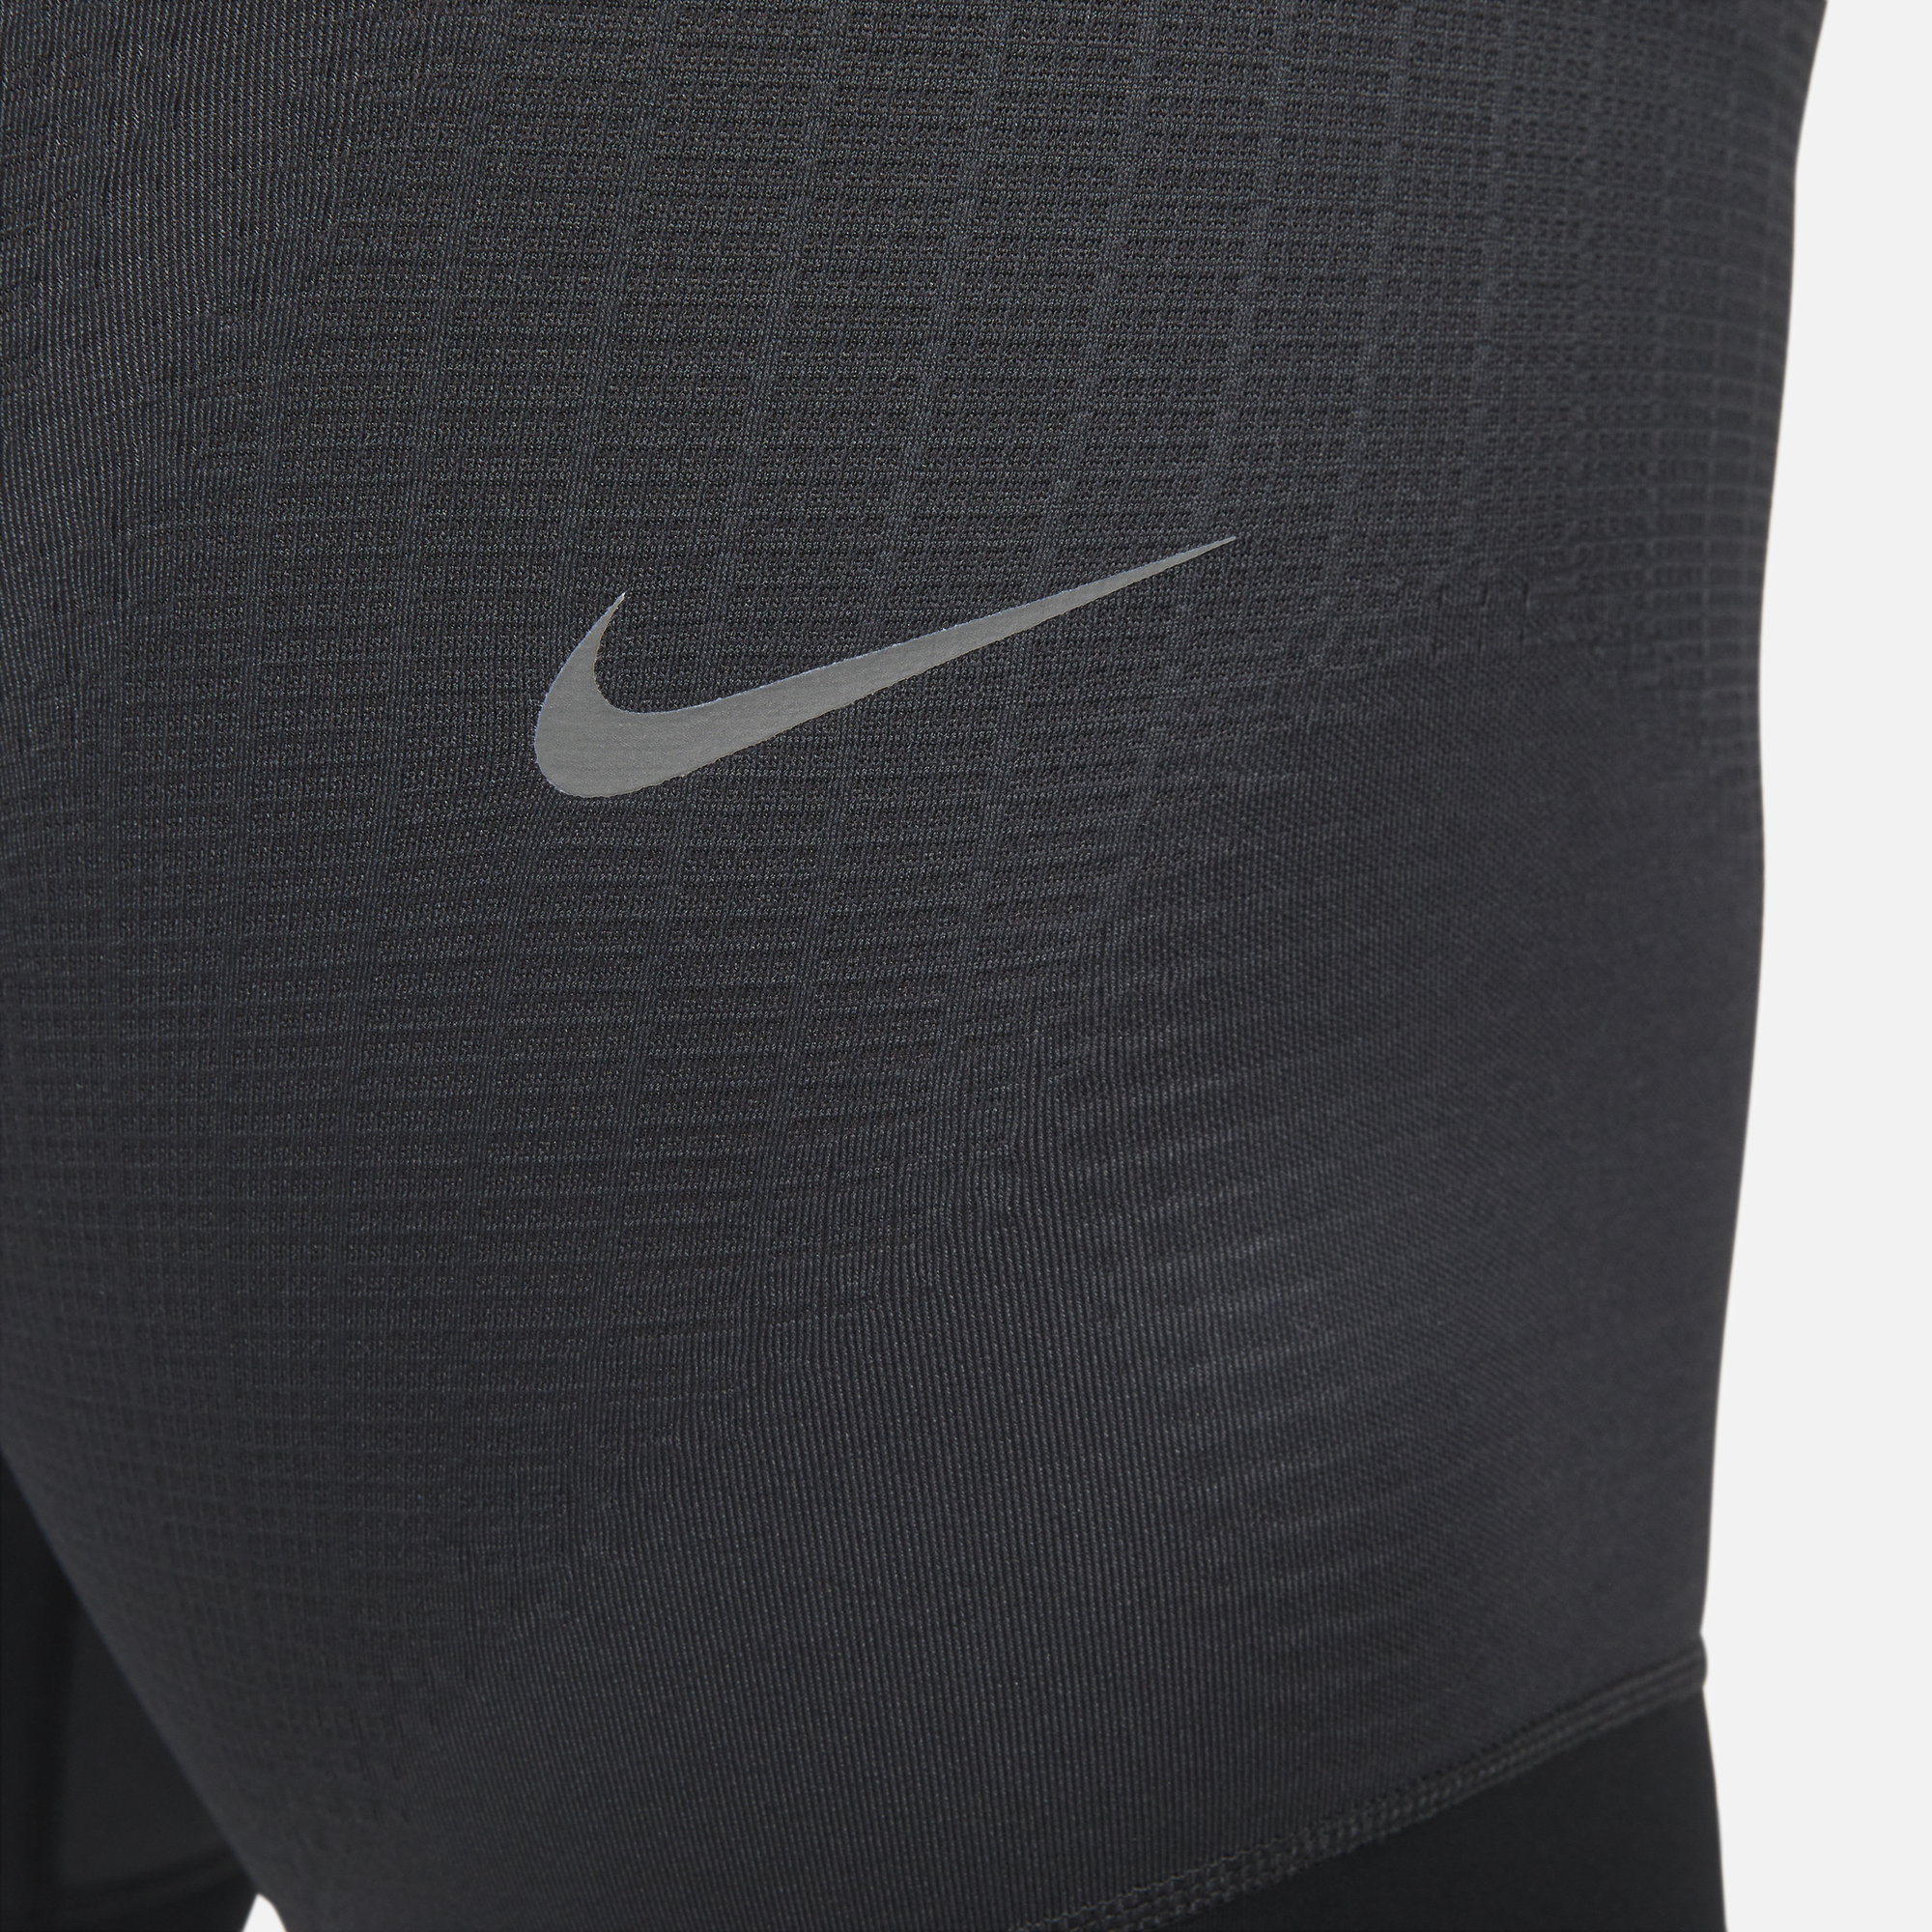 Nike Men'Phenom Elite Running Tights Pants Size L Black CZ8823-010 NWT 